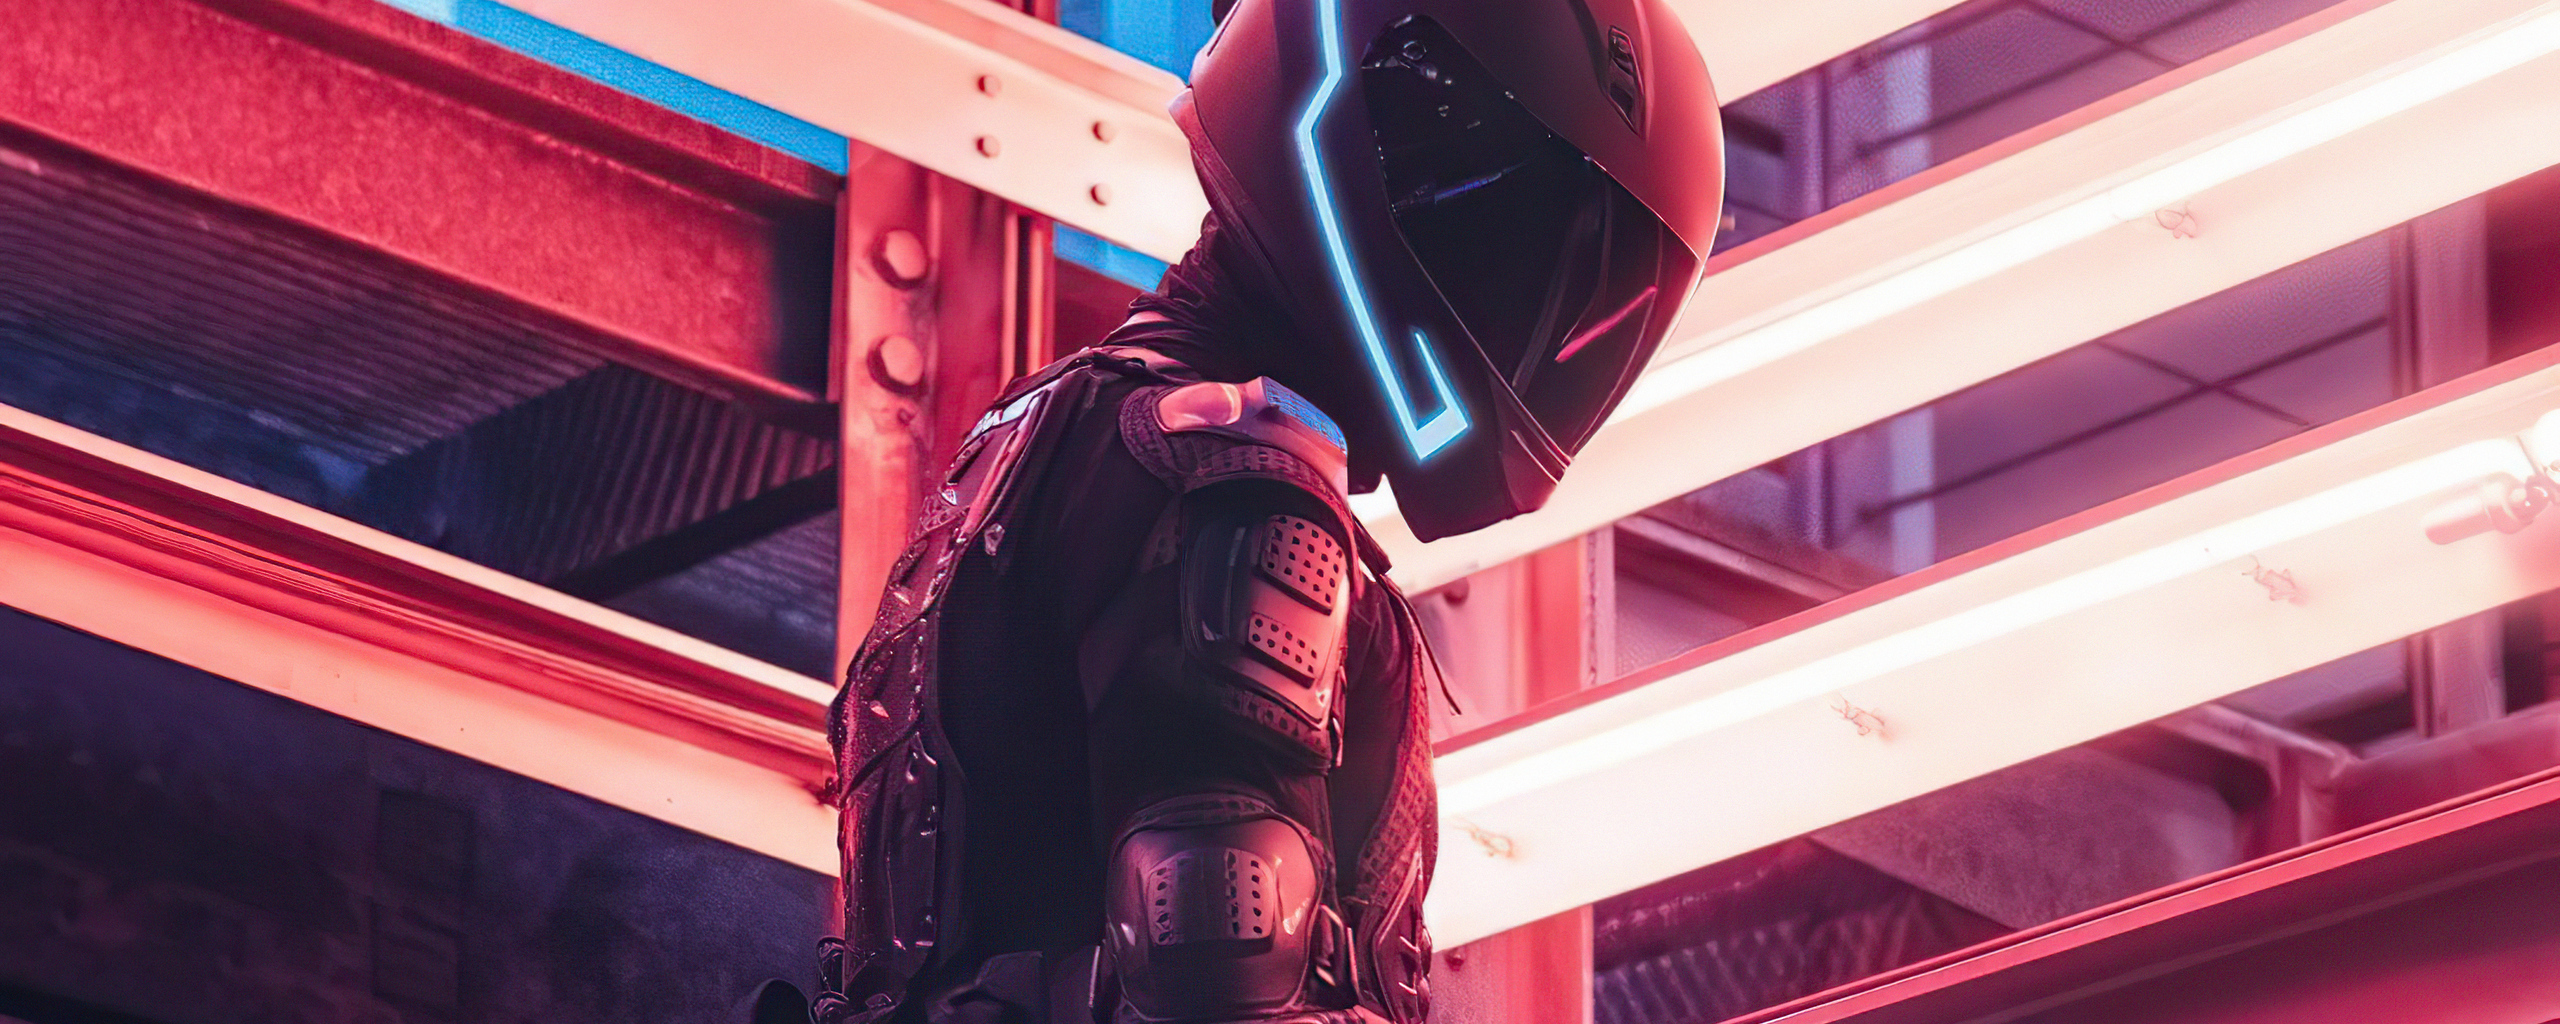 tech-noir-helmet-scifi-5k-n4.jpg